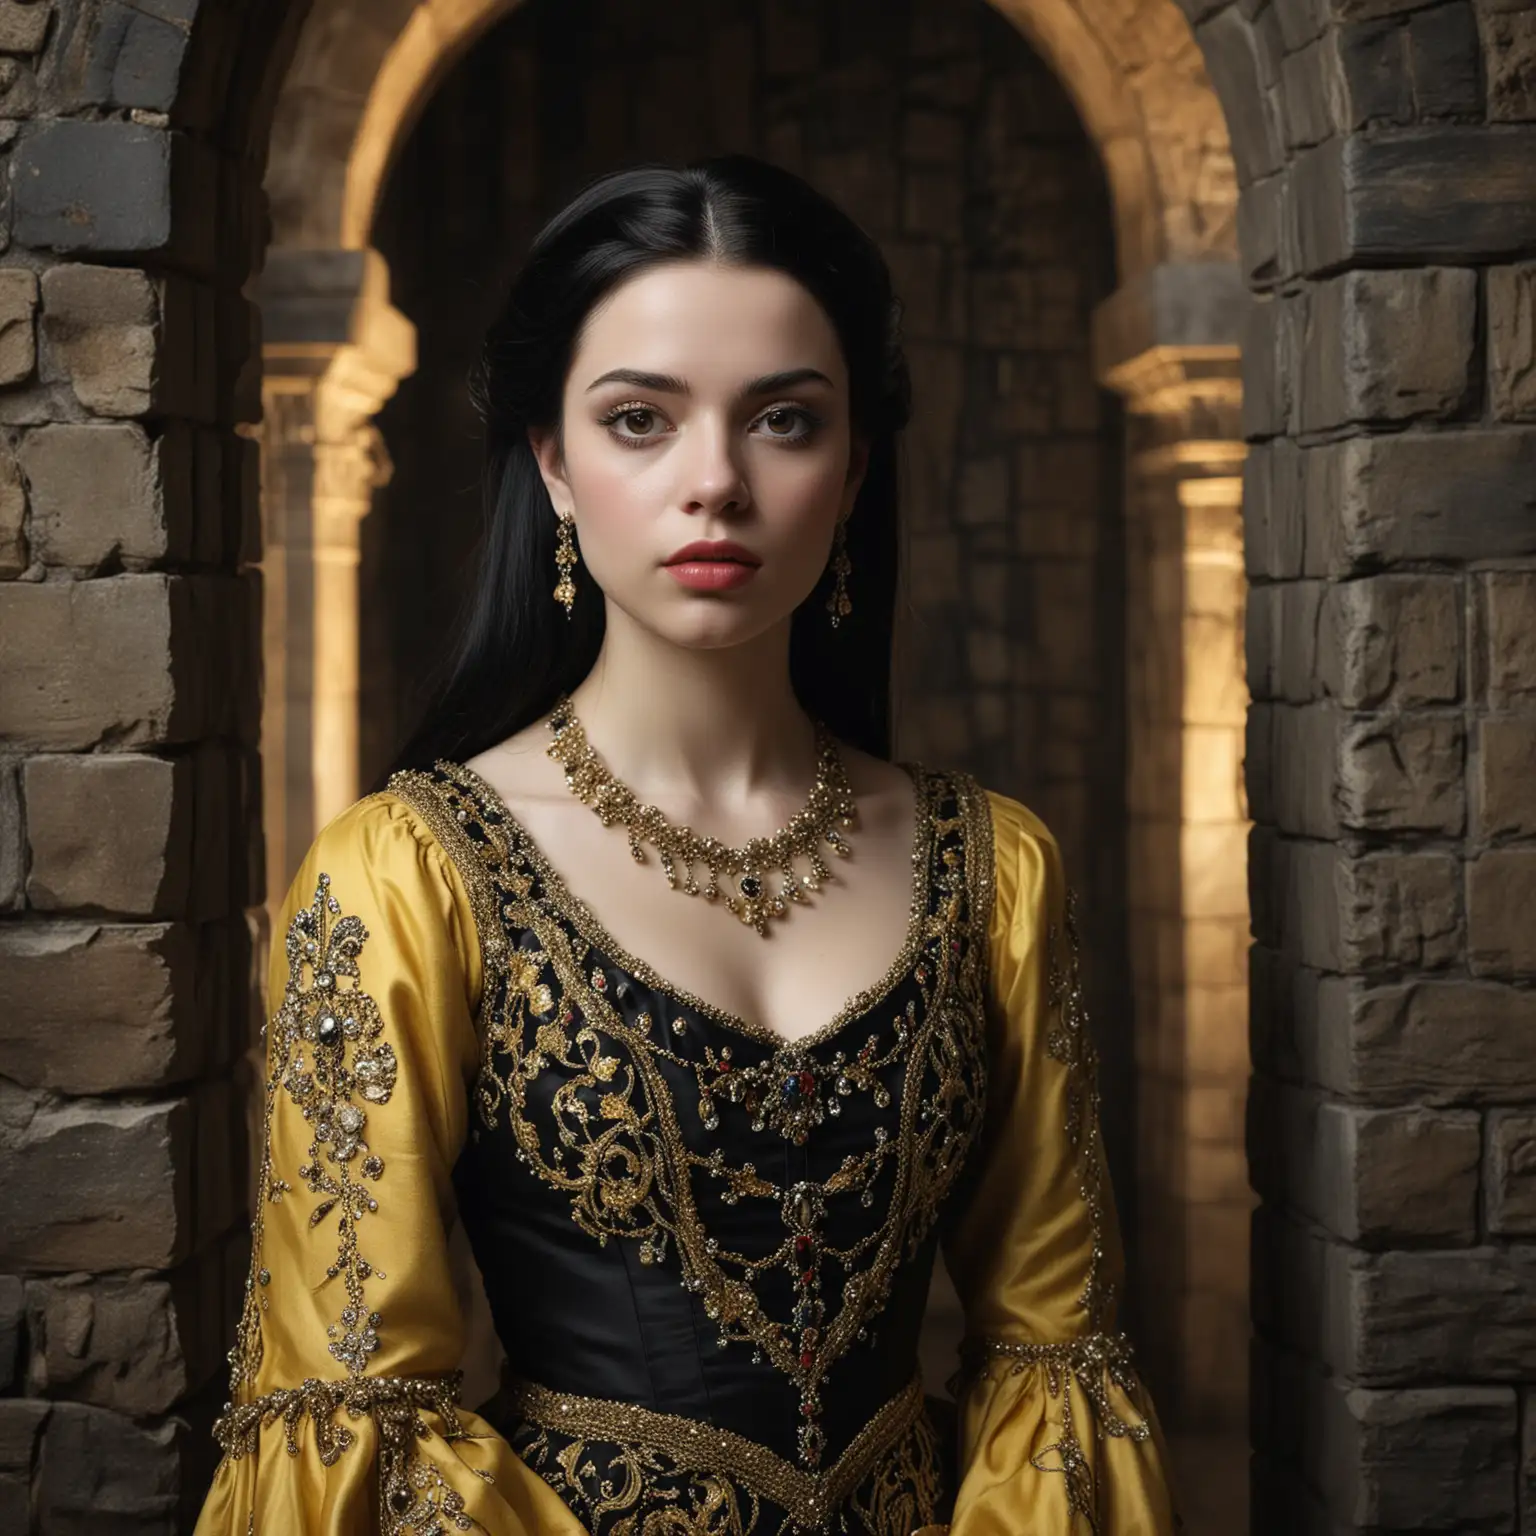 Elegant Renaissance Woman in JewelAdorned Gown